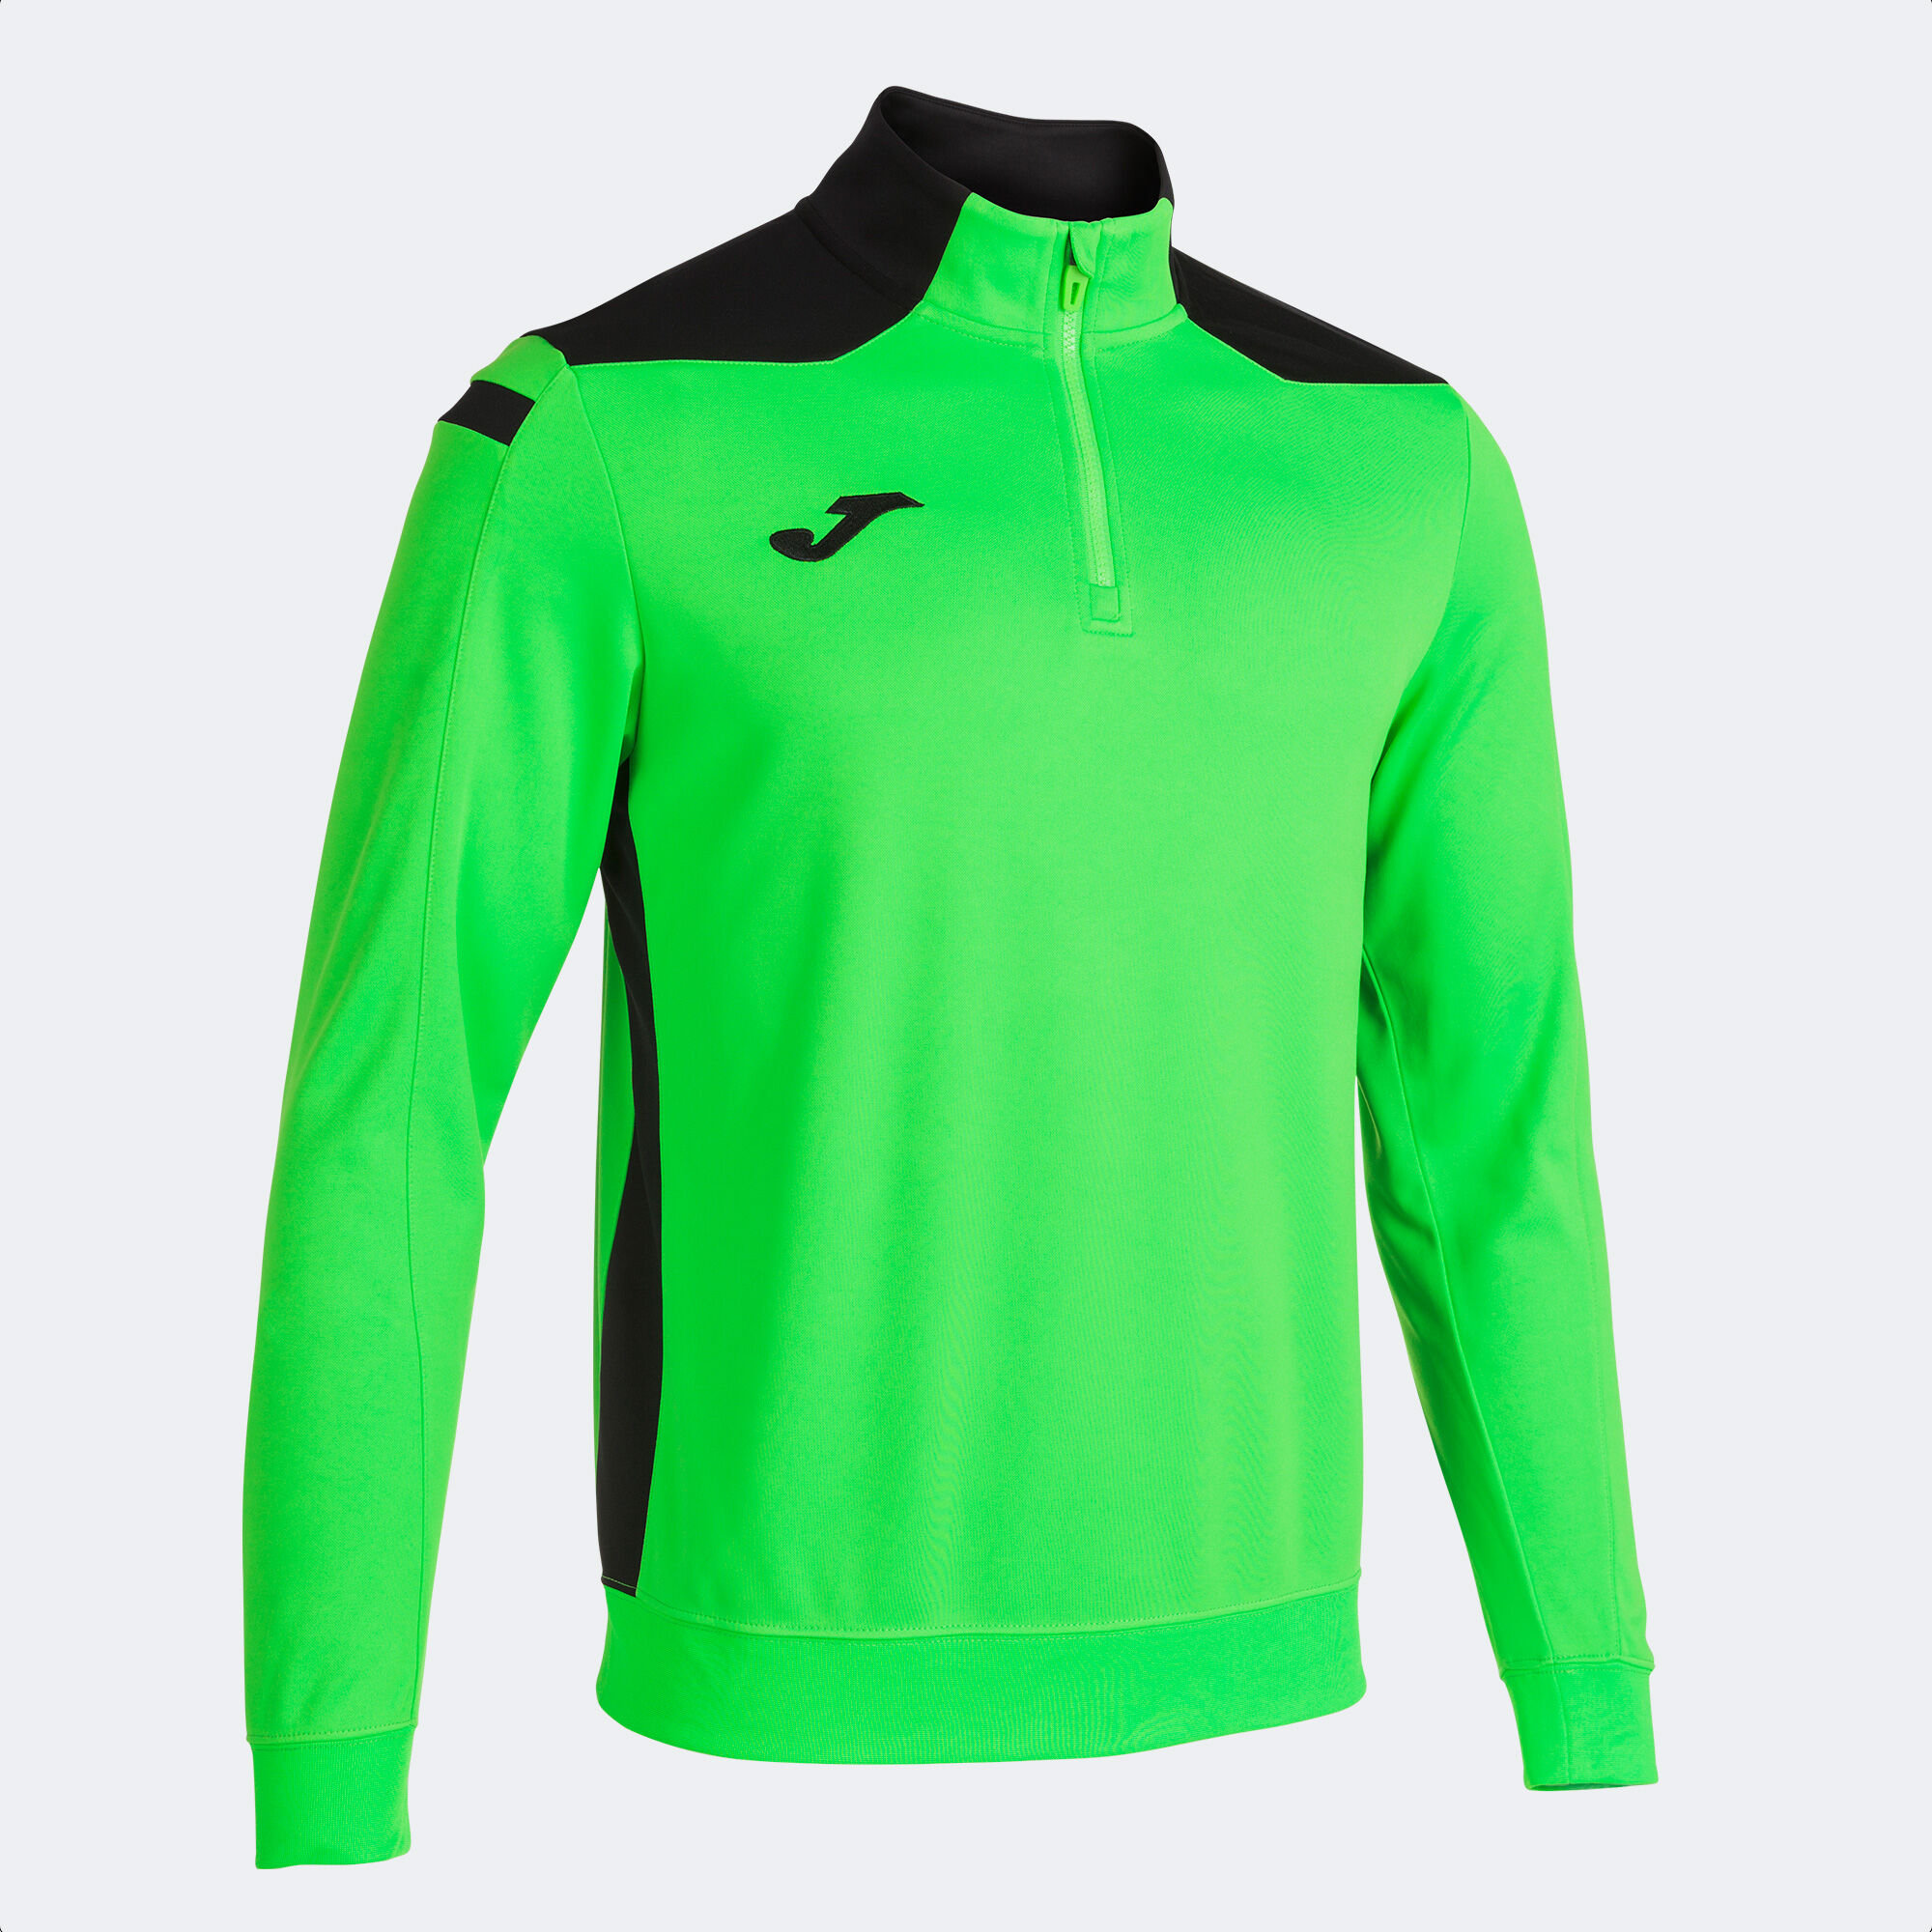 Sweat-shirt homme Championship VI vert fluo noir